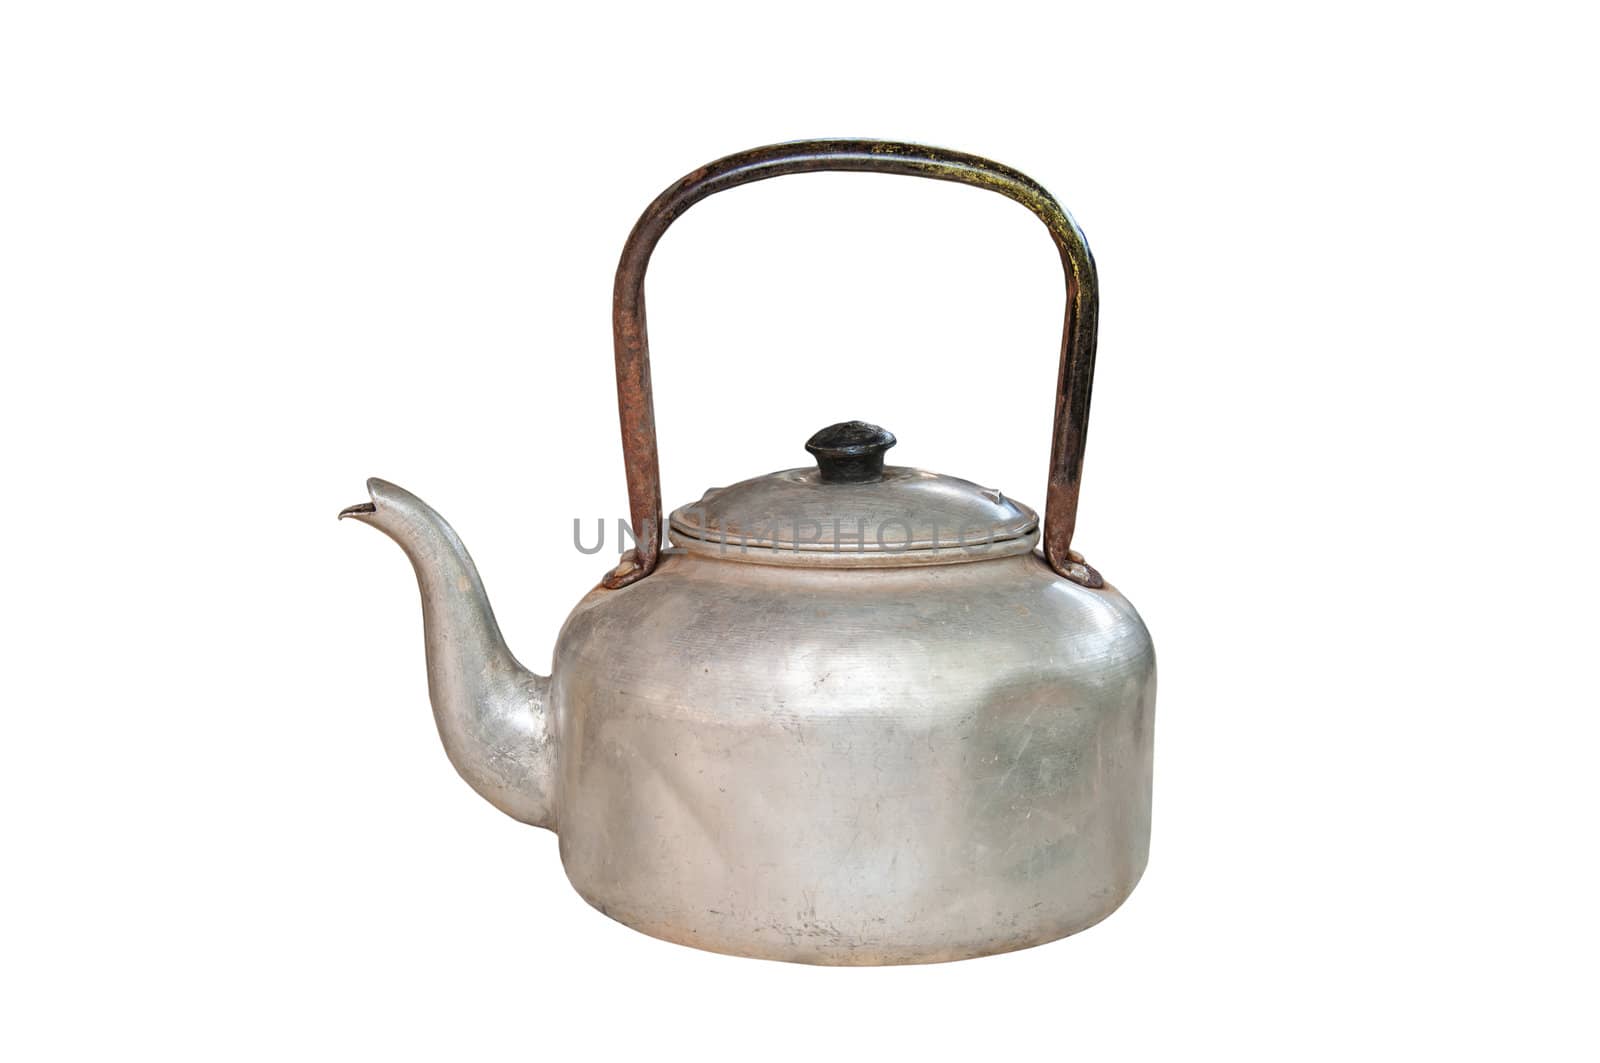 Old teapot on white background.